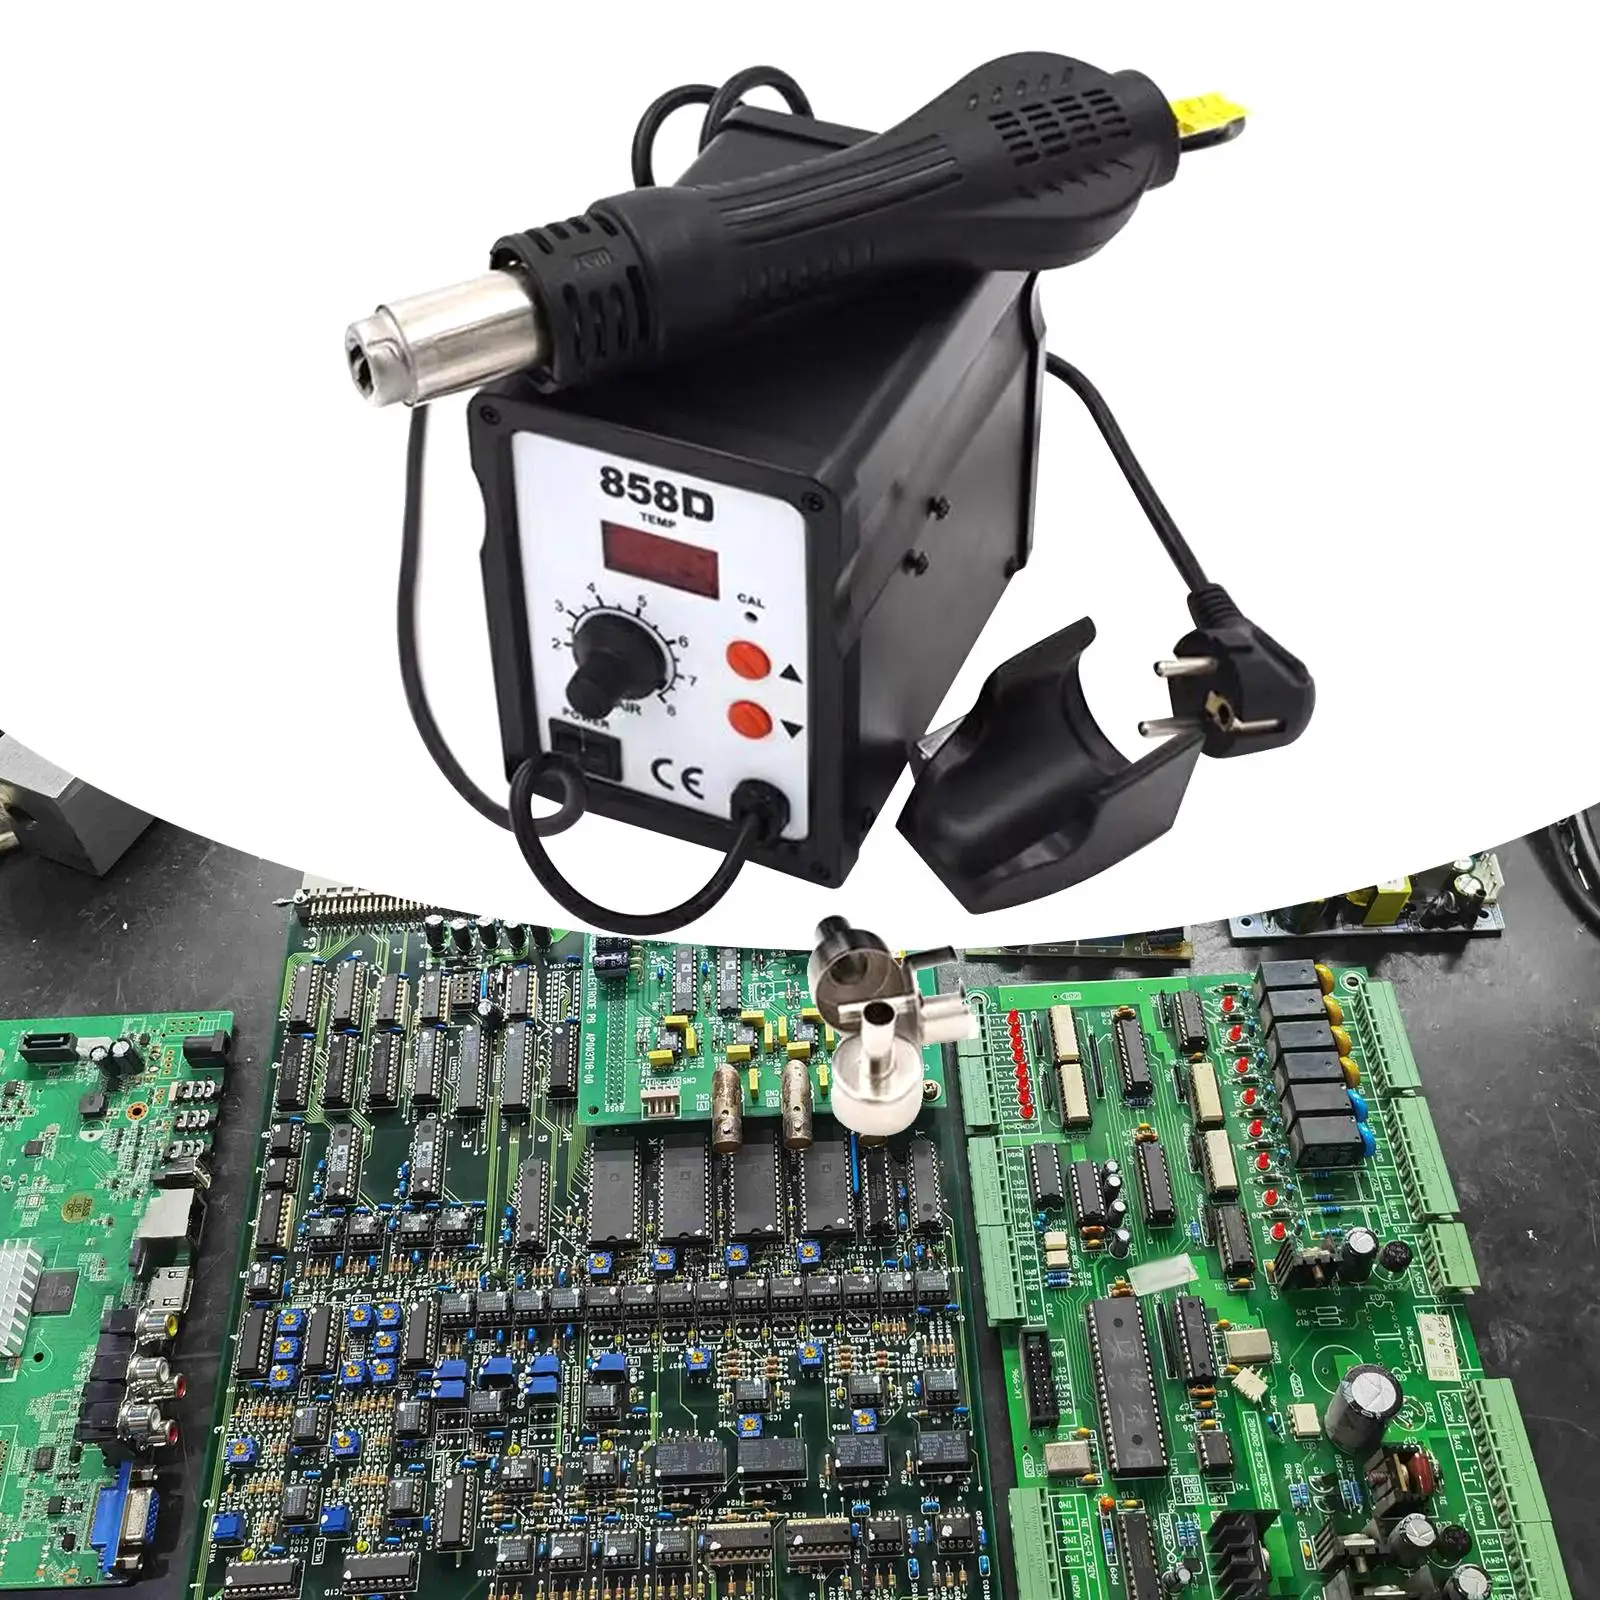 Digital Soldering Station Portable Alloy Adjustable Professional Desoldering Station for Repairing Laptop Electric Appliance